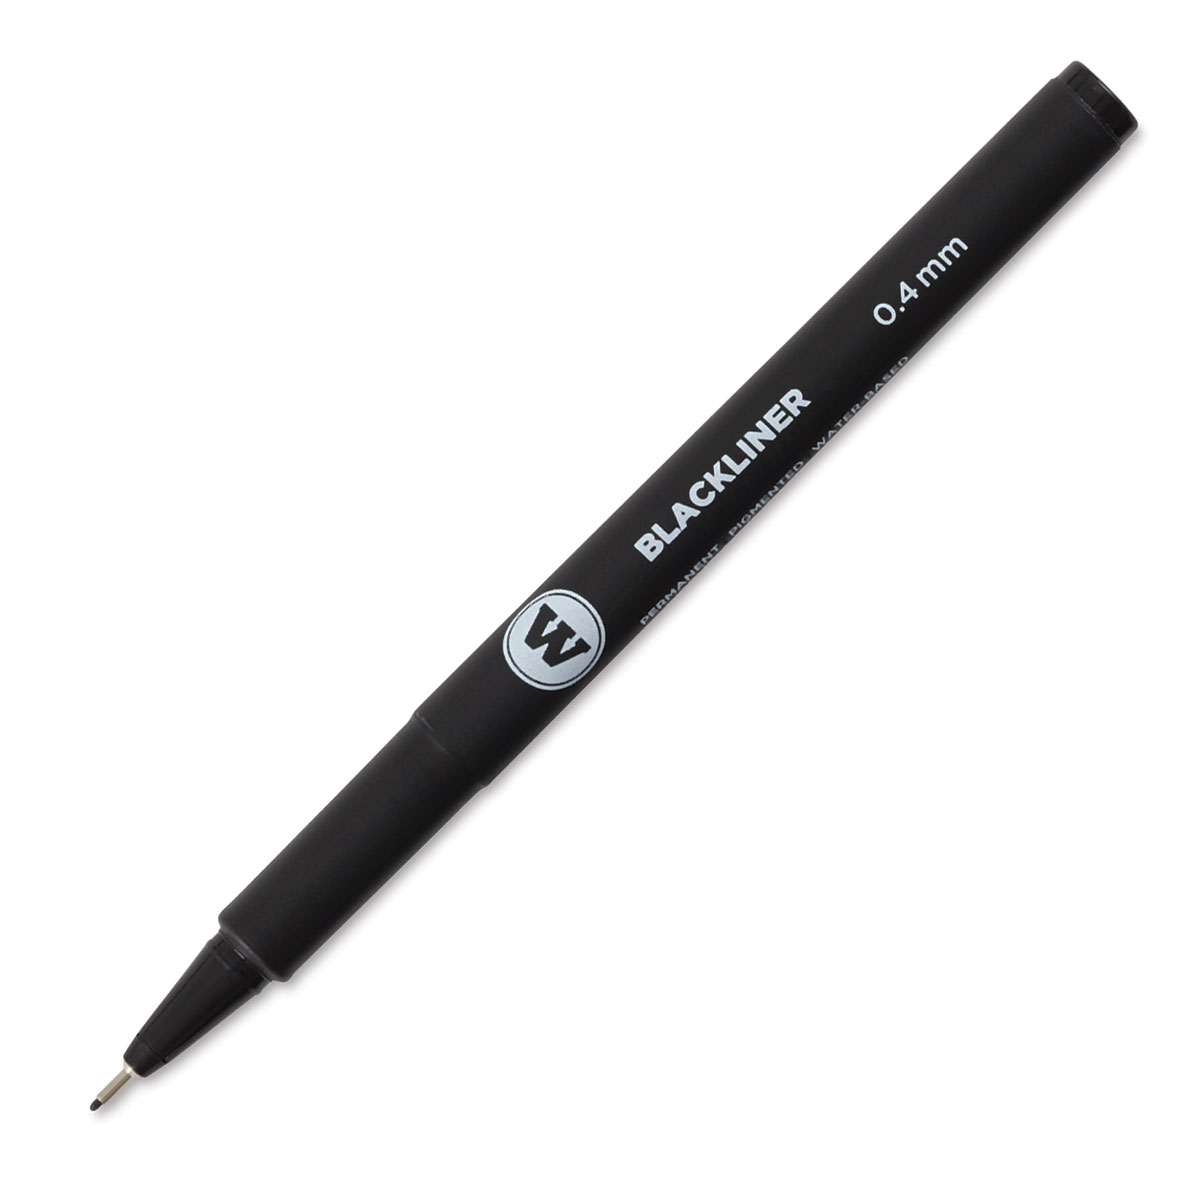 Pacific Arc Professional Blackliner Pen